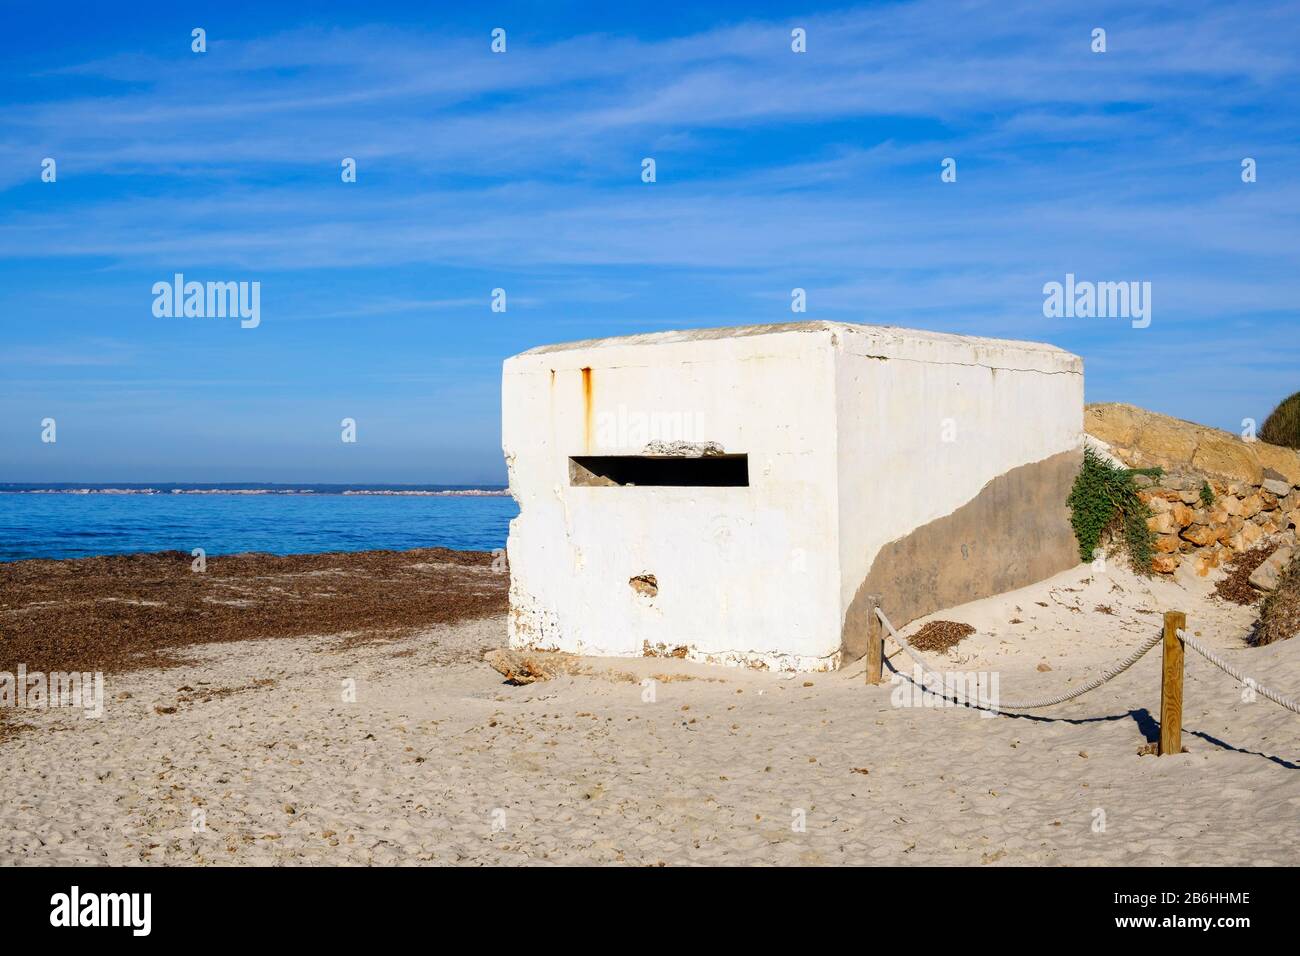 Bunker on the beach Es Trenc, Es Trenc-Salobrar de Campos nature park Park, near Sant Jordi, Migjorn region, Majorca, Balearic Islands, Spain Stock Photo